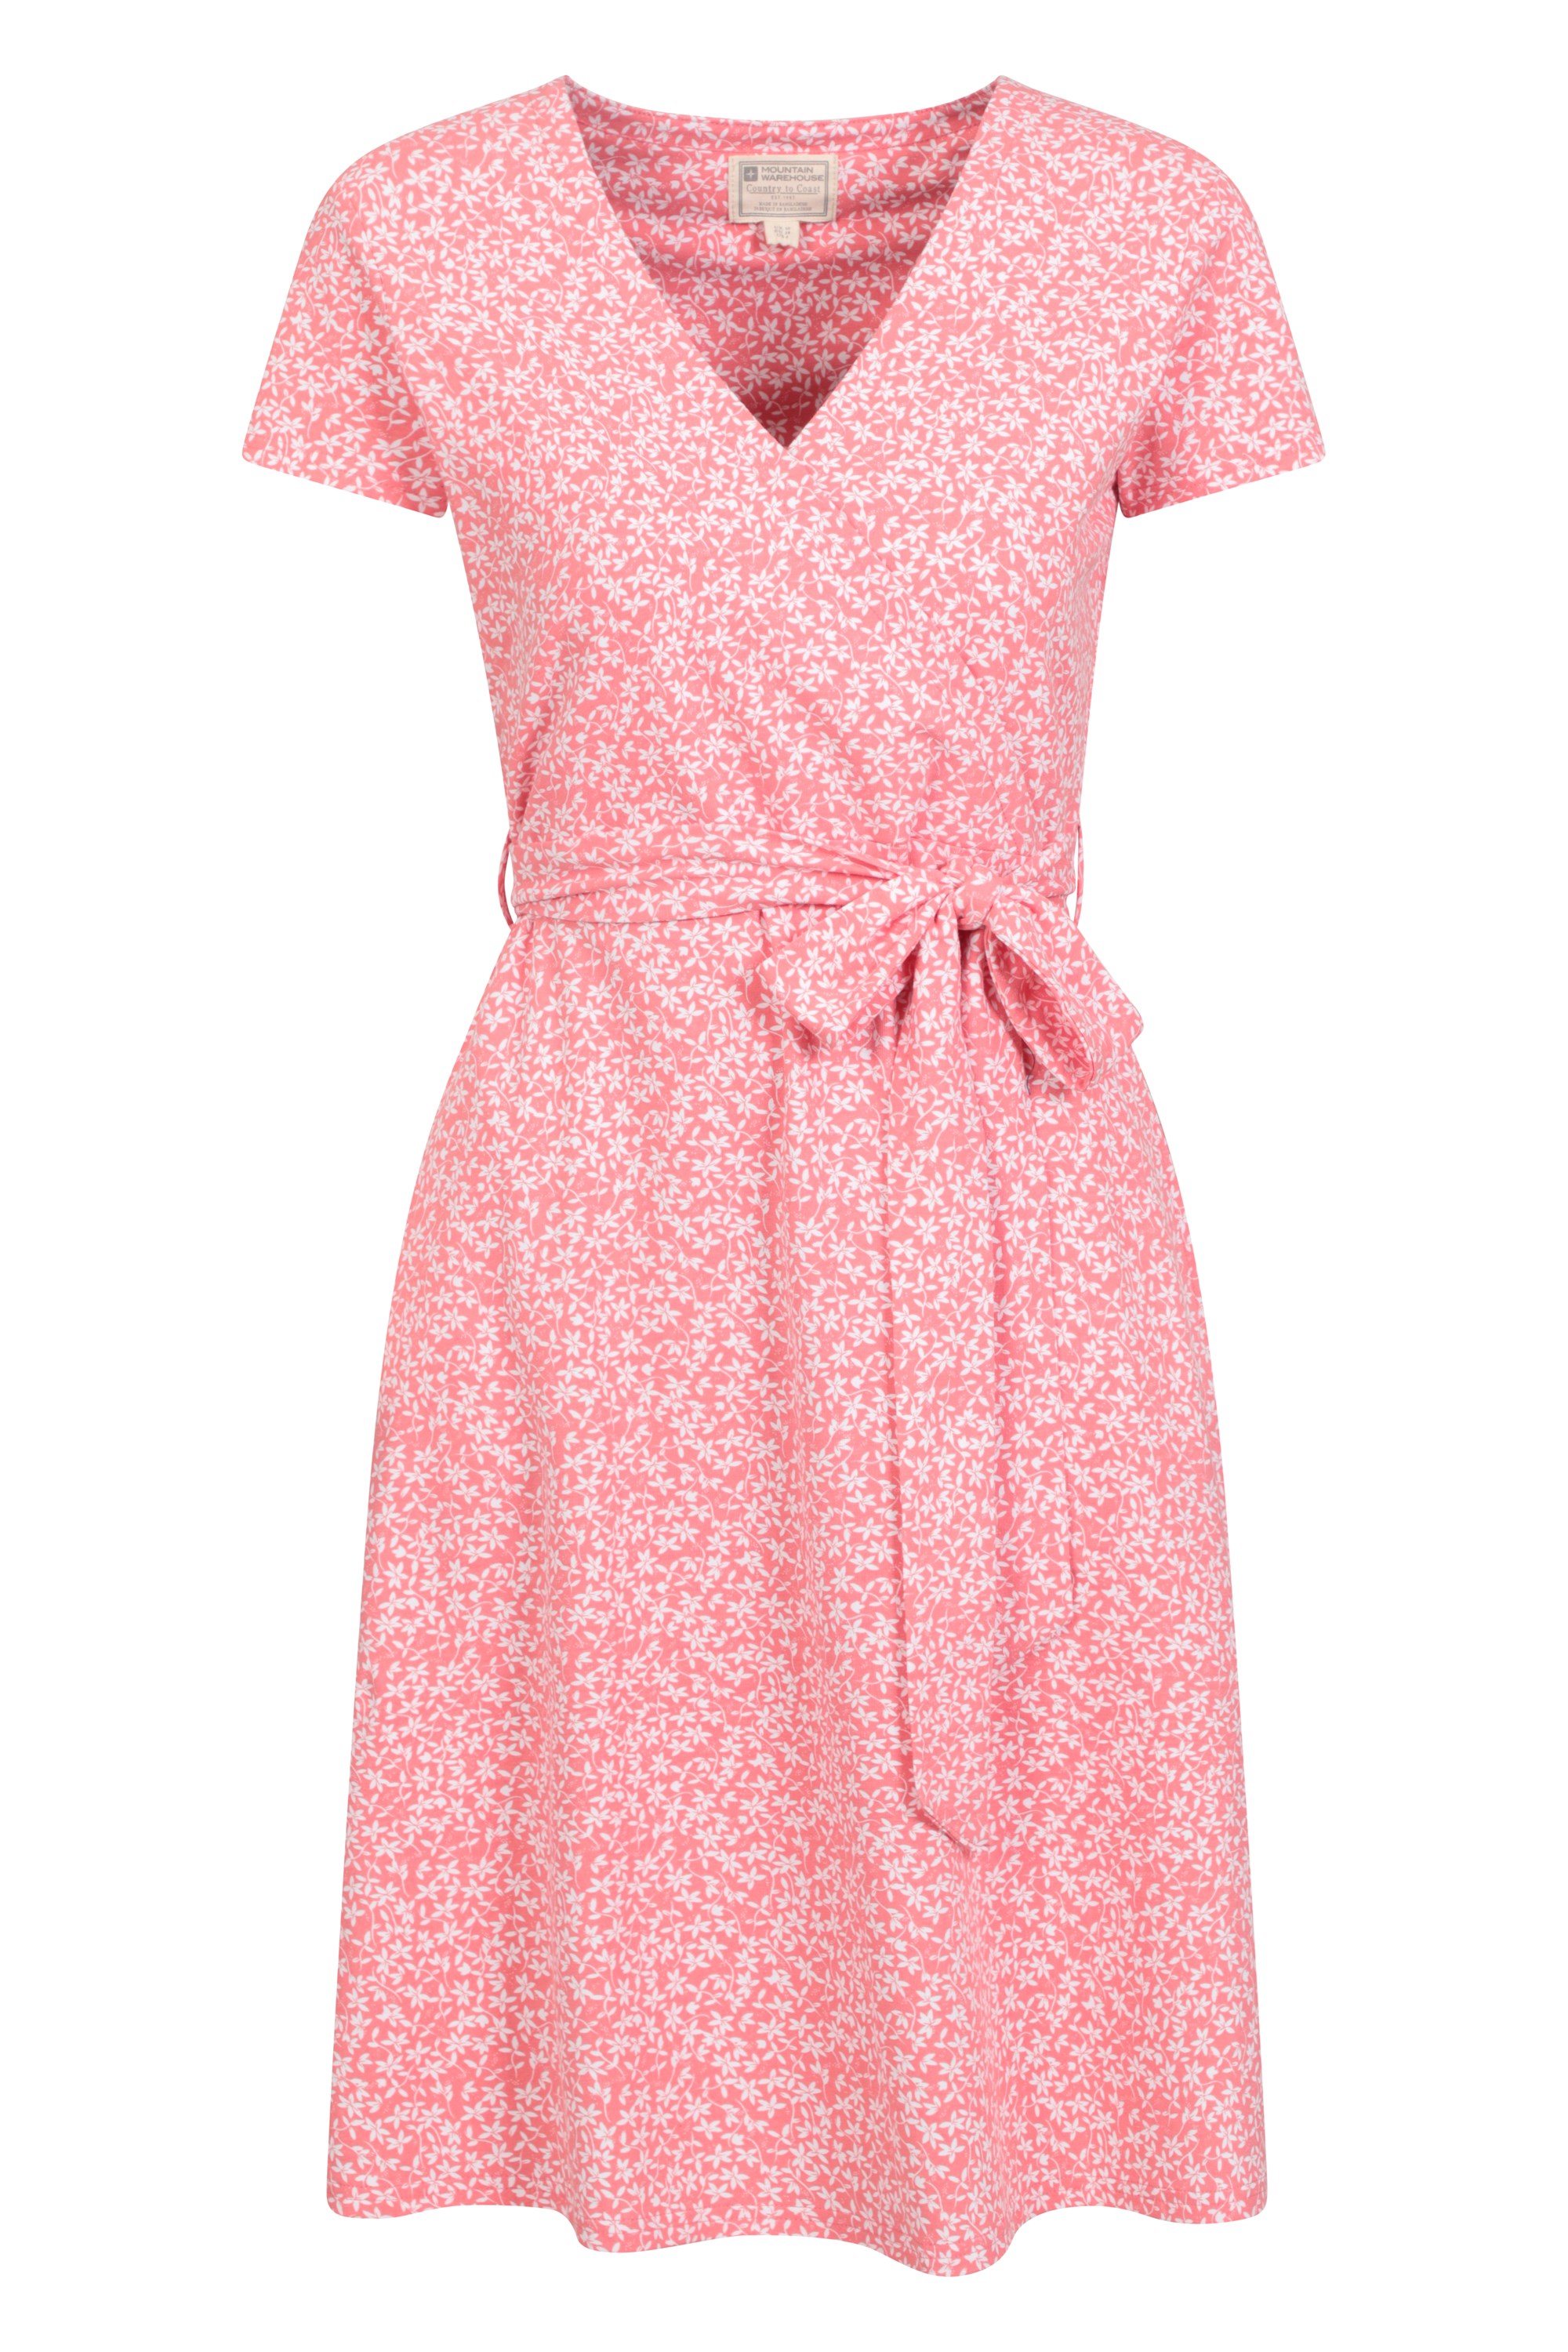 Santorini Wrap - sukienka z filtrem UV - Pink